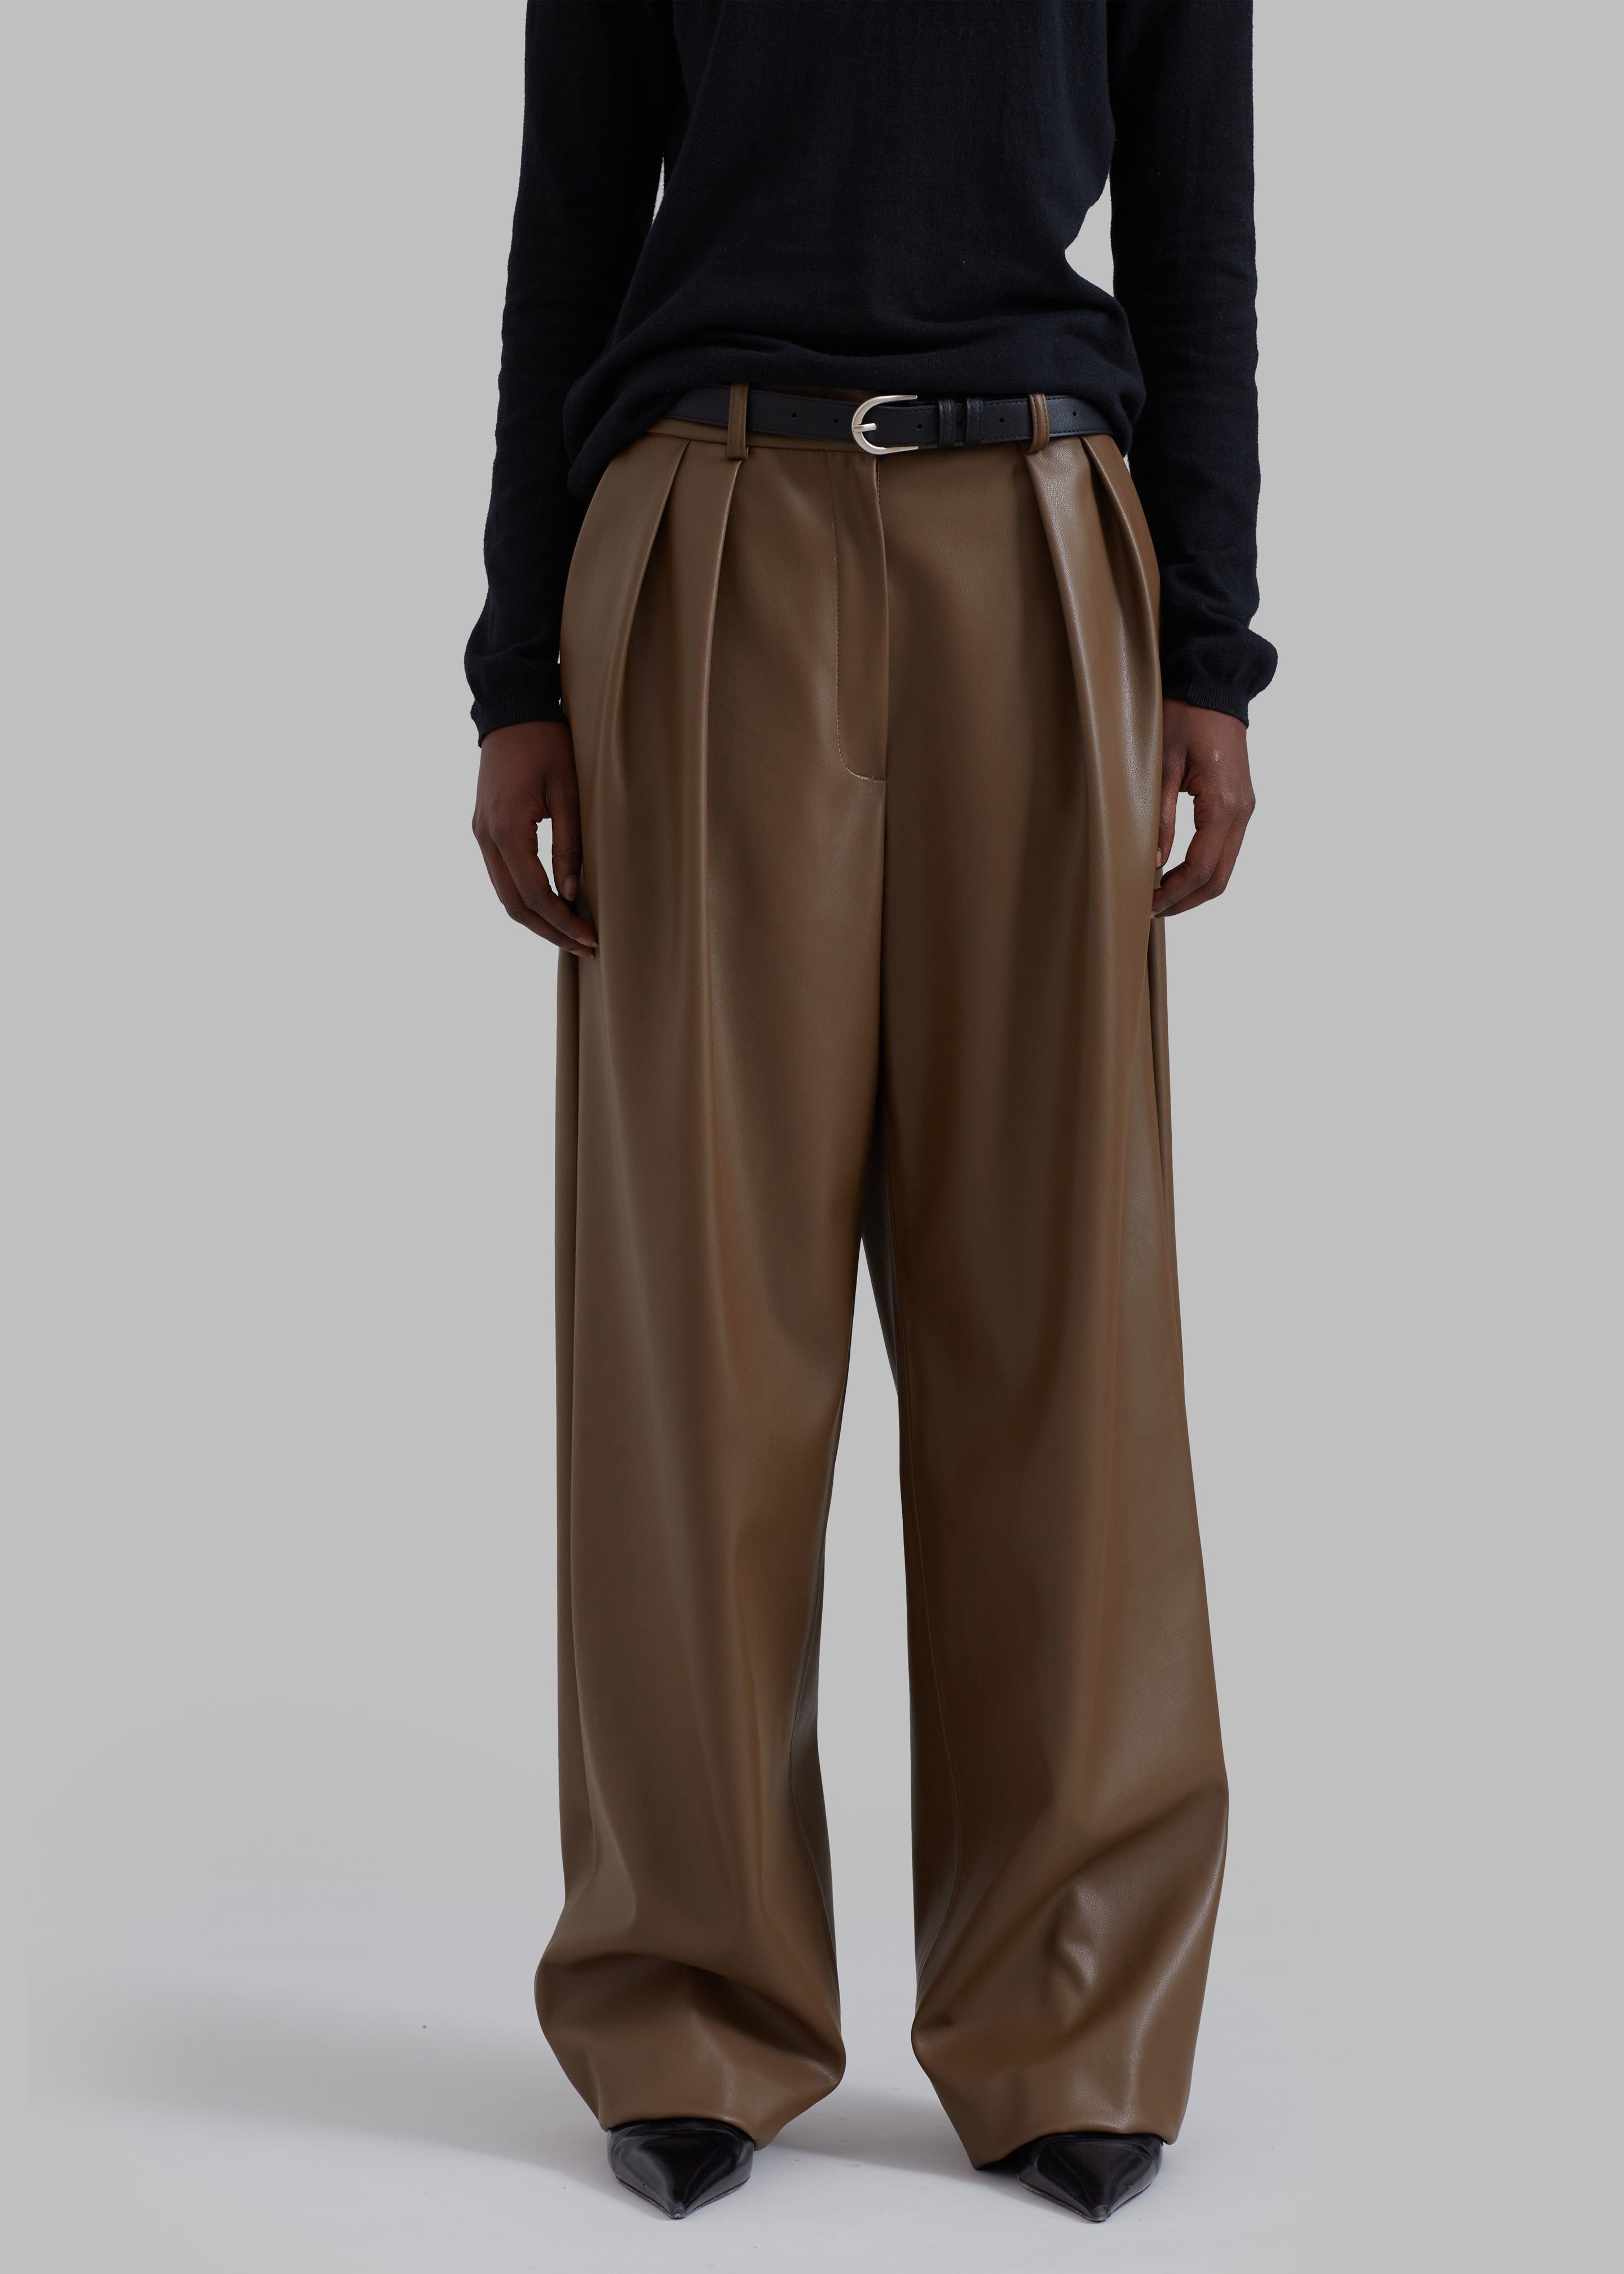 Tranton Faux Leather Pants - Brown - 1